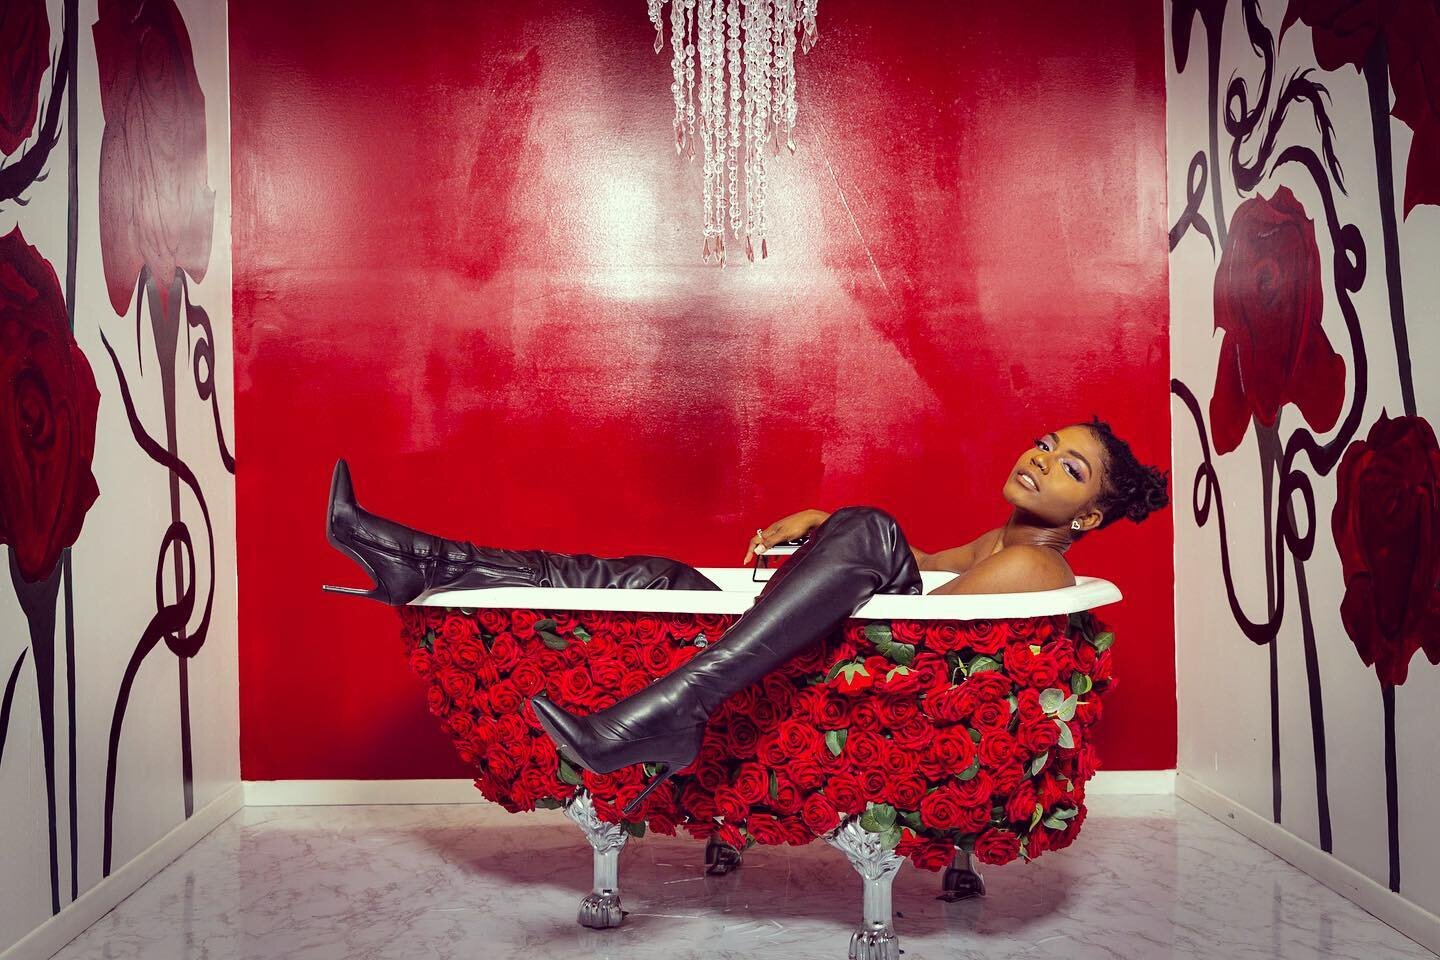 #TREATYOSELF to a luxurious dip in the million roses tub 🌹 
 
Framed:  @thelollymariah 
📸 : @dbphotos.det 

Rose wall mural artist: @jordan.nik.art 

#detroitselfiemuseum #thedetroitselfiemuseum #dsm #thingstodoindetroit #detroitevents #michigansel